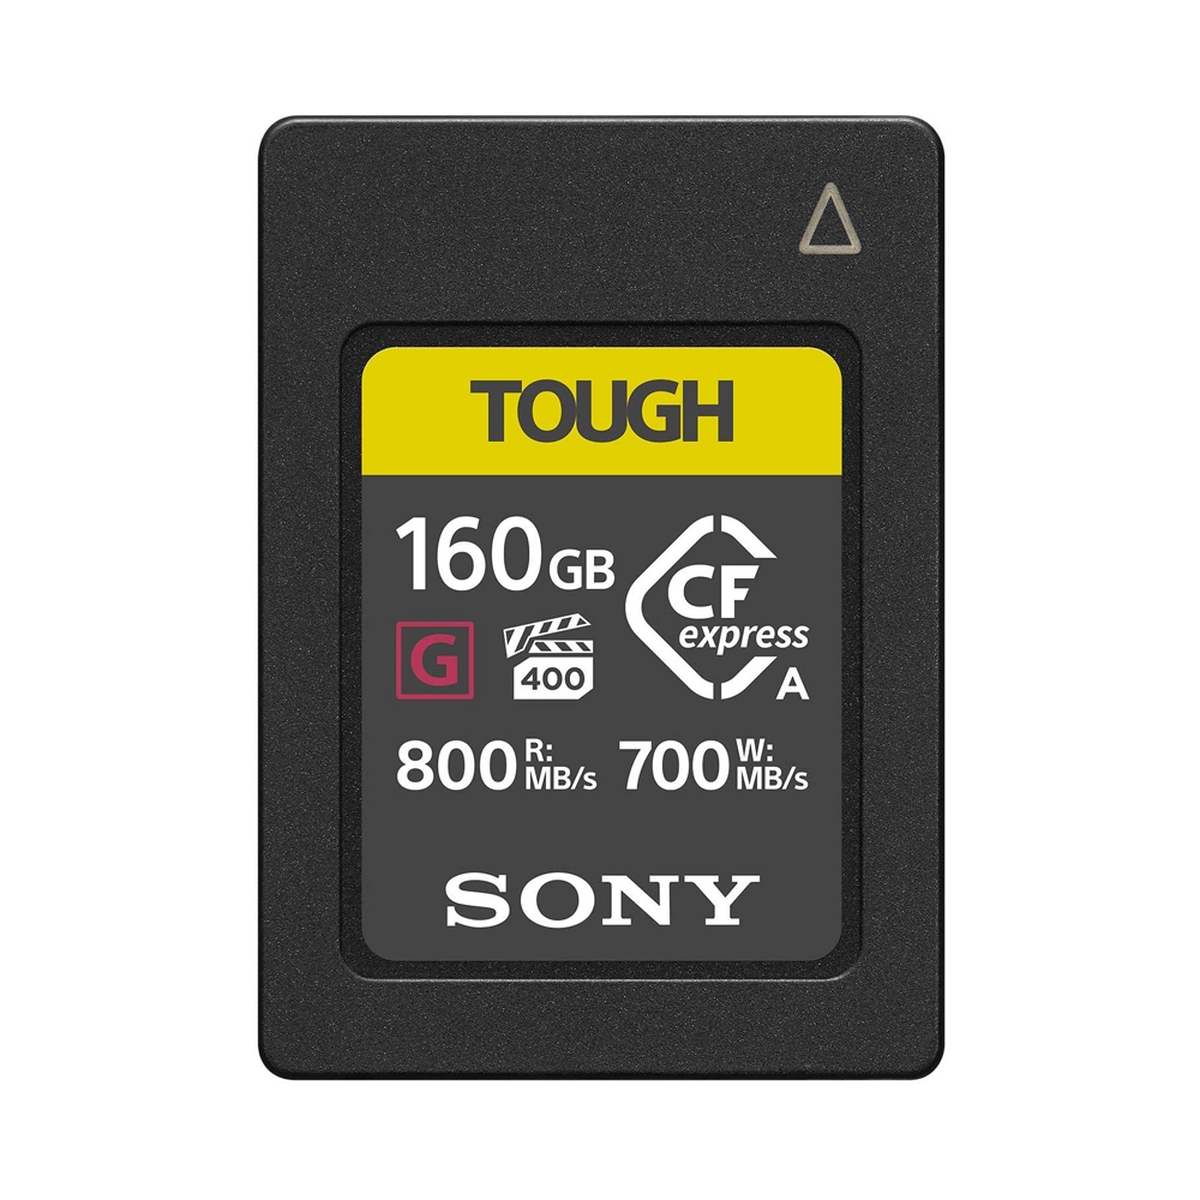 Sony 160 GB CF Express Tough G Typ A